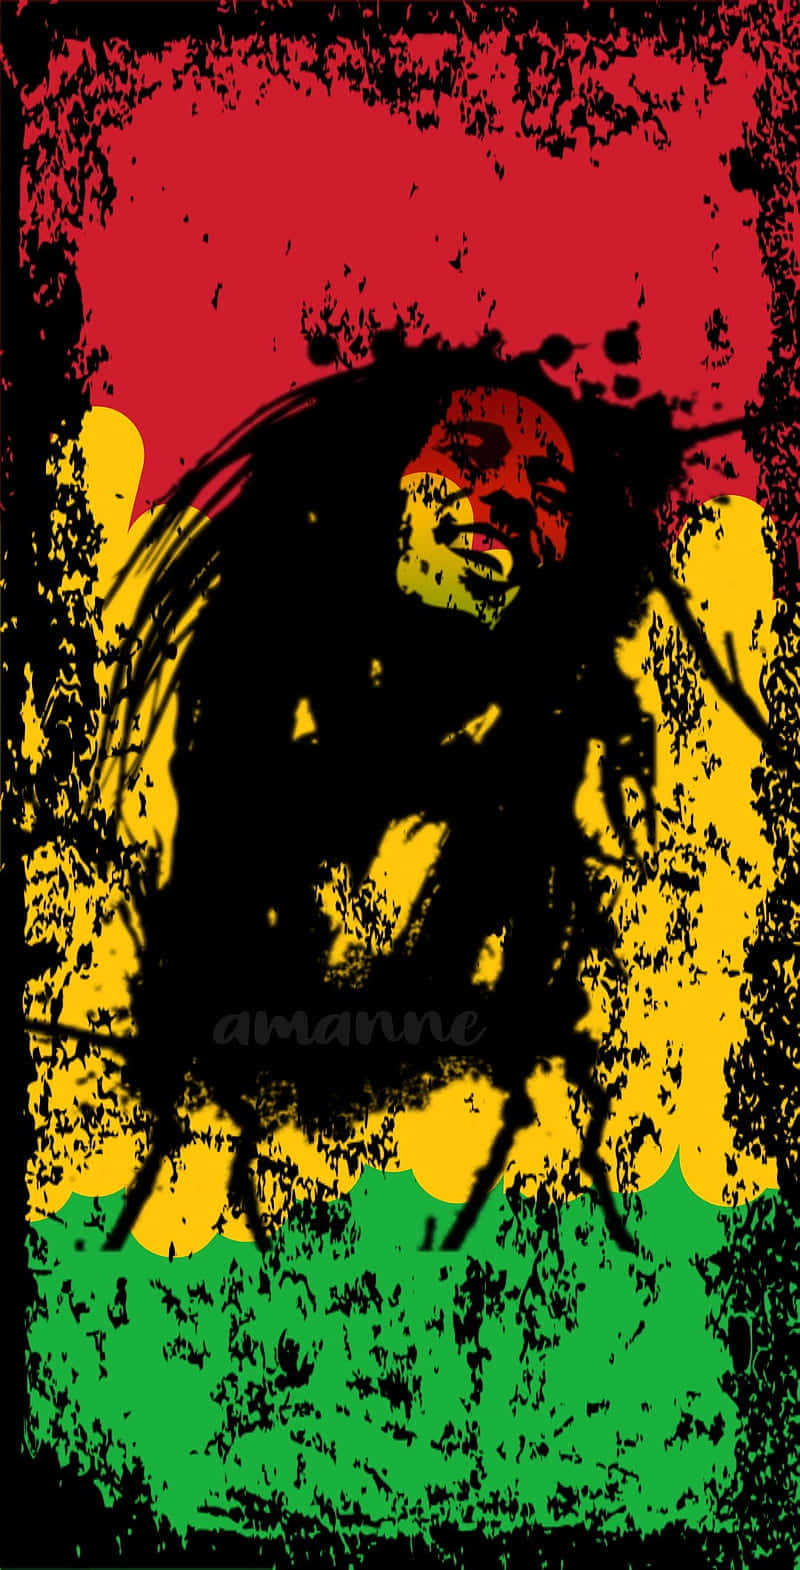 Unuomo Rastafari Adornato Nei Colori Del Reggae. Sfondo